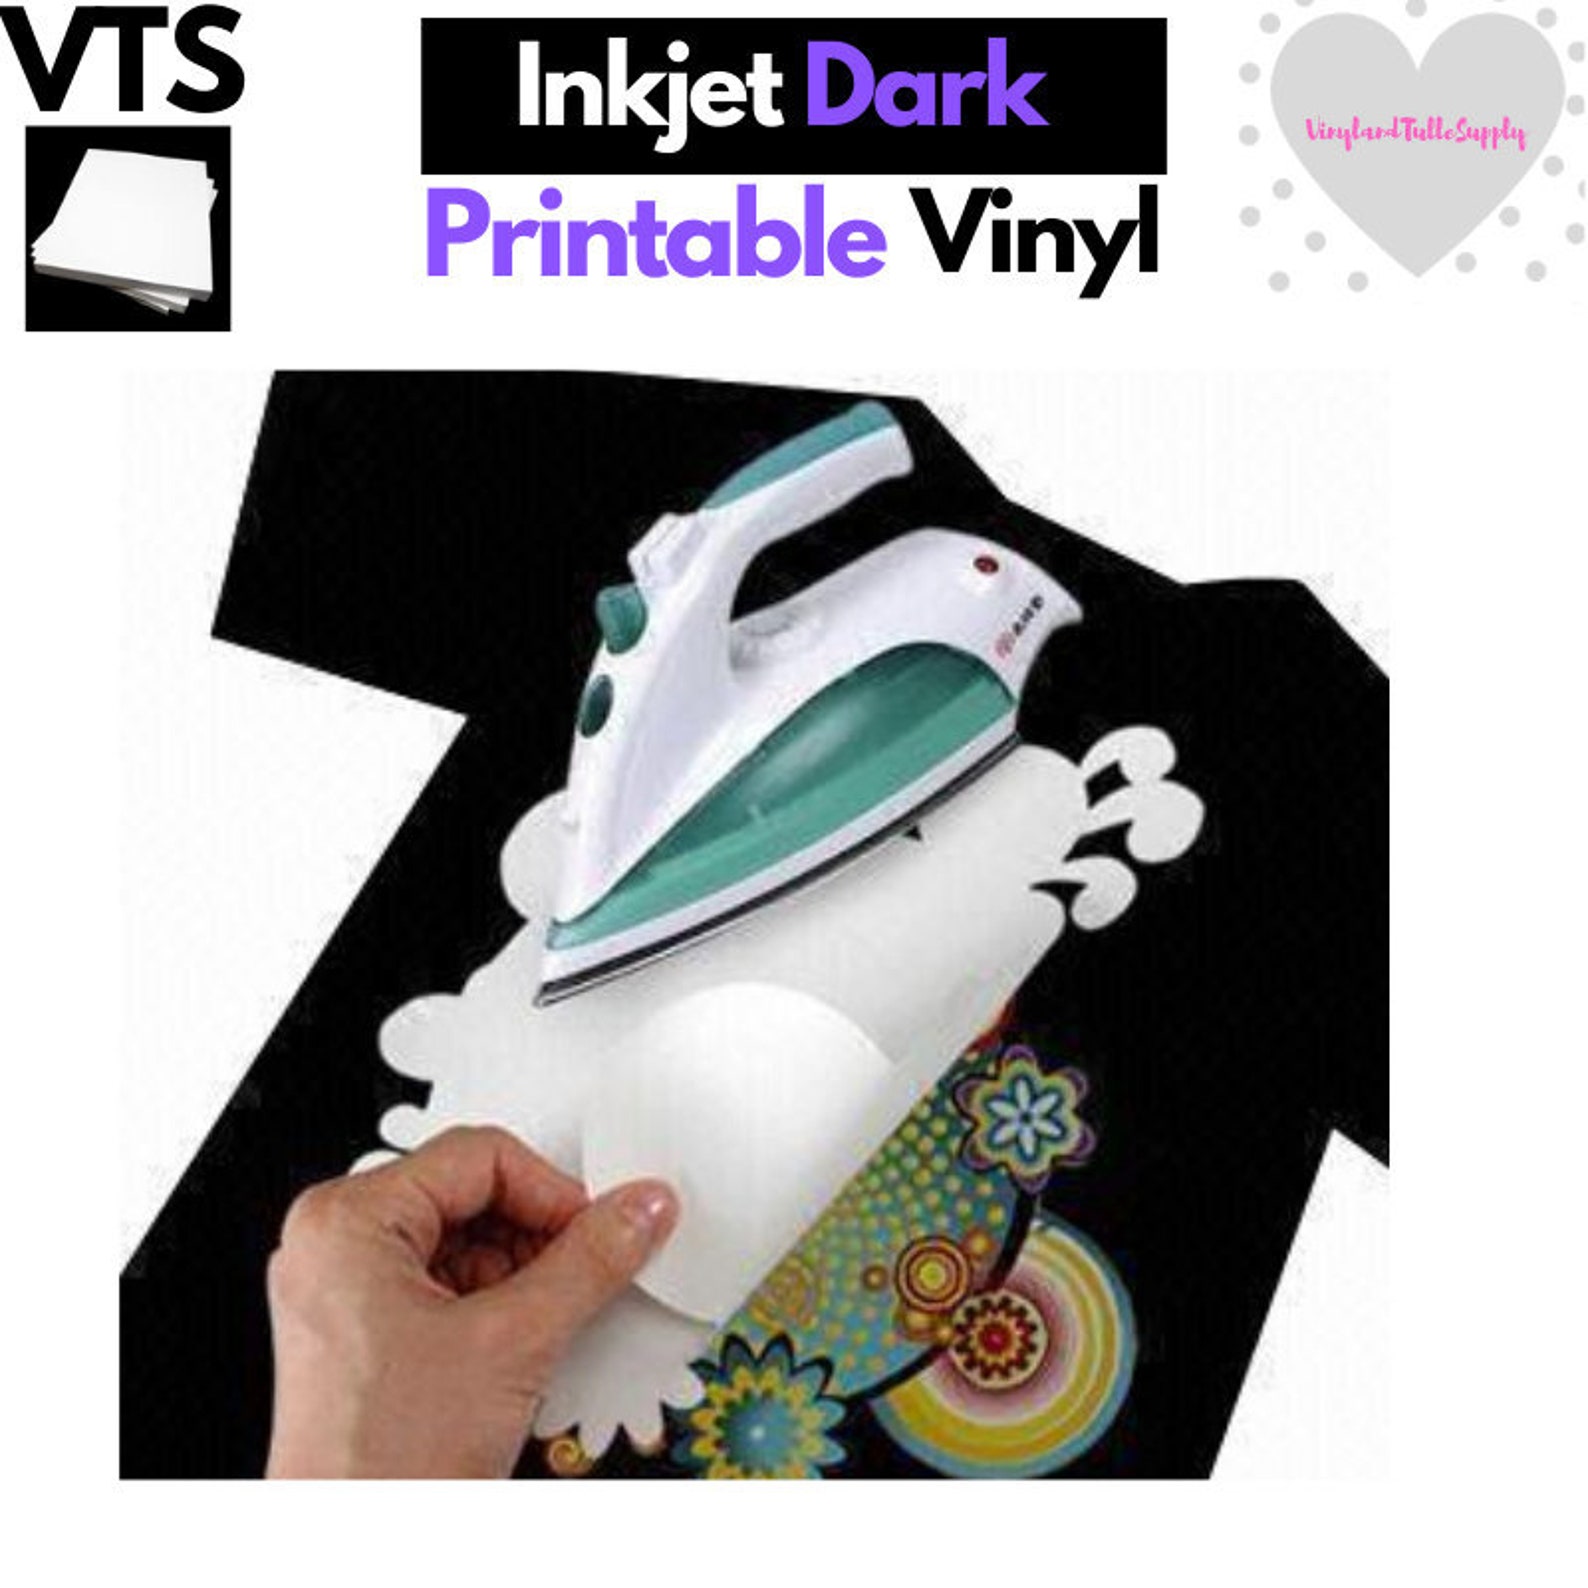 Inkjet IronOn Printable Vinyl Dark fabric 8.5 x Etsy